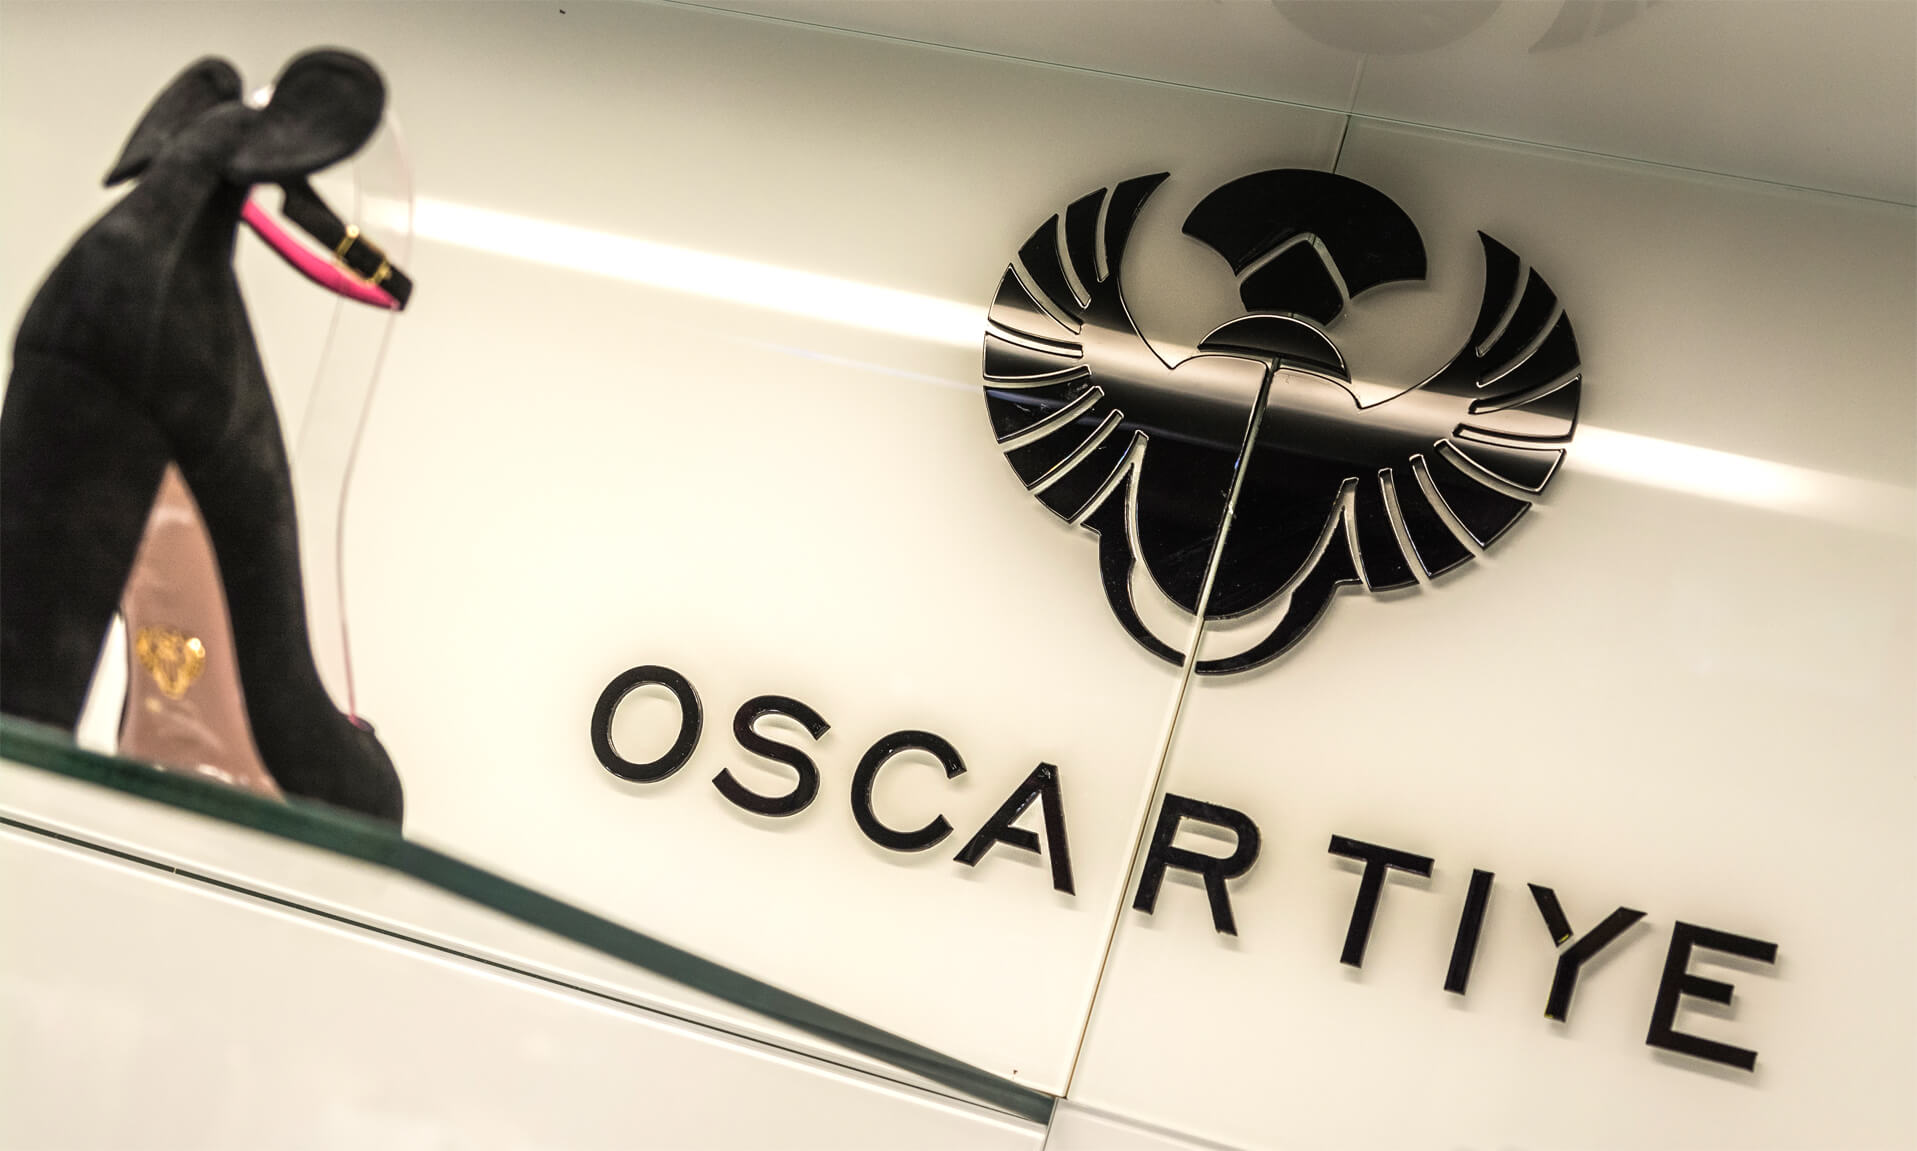 Oscartye - Oscar Tiye - logo et lettres 3D en acrylique de couleur noire